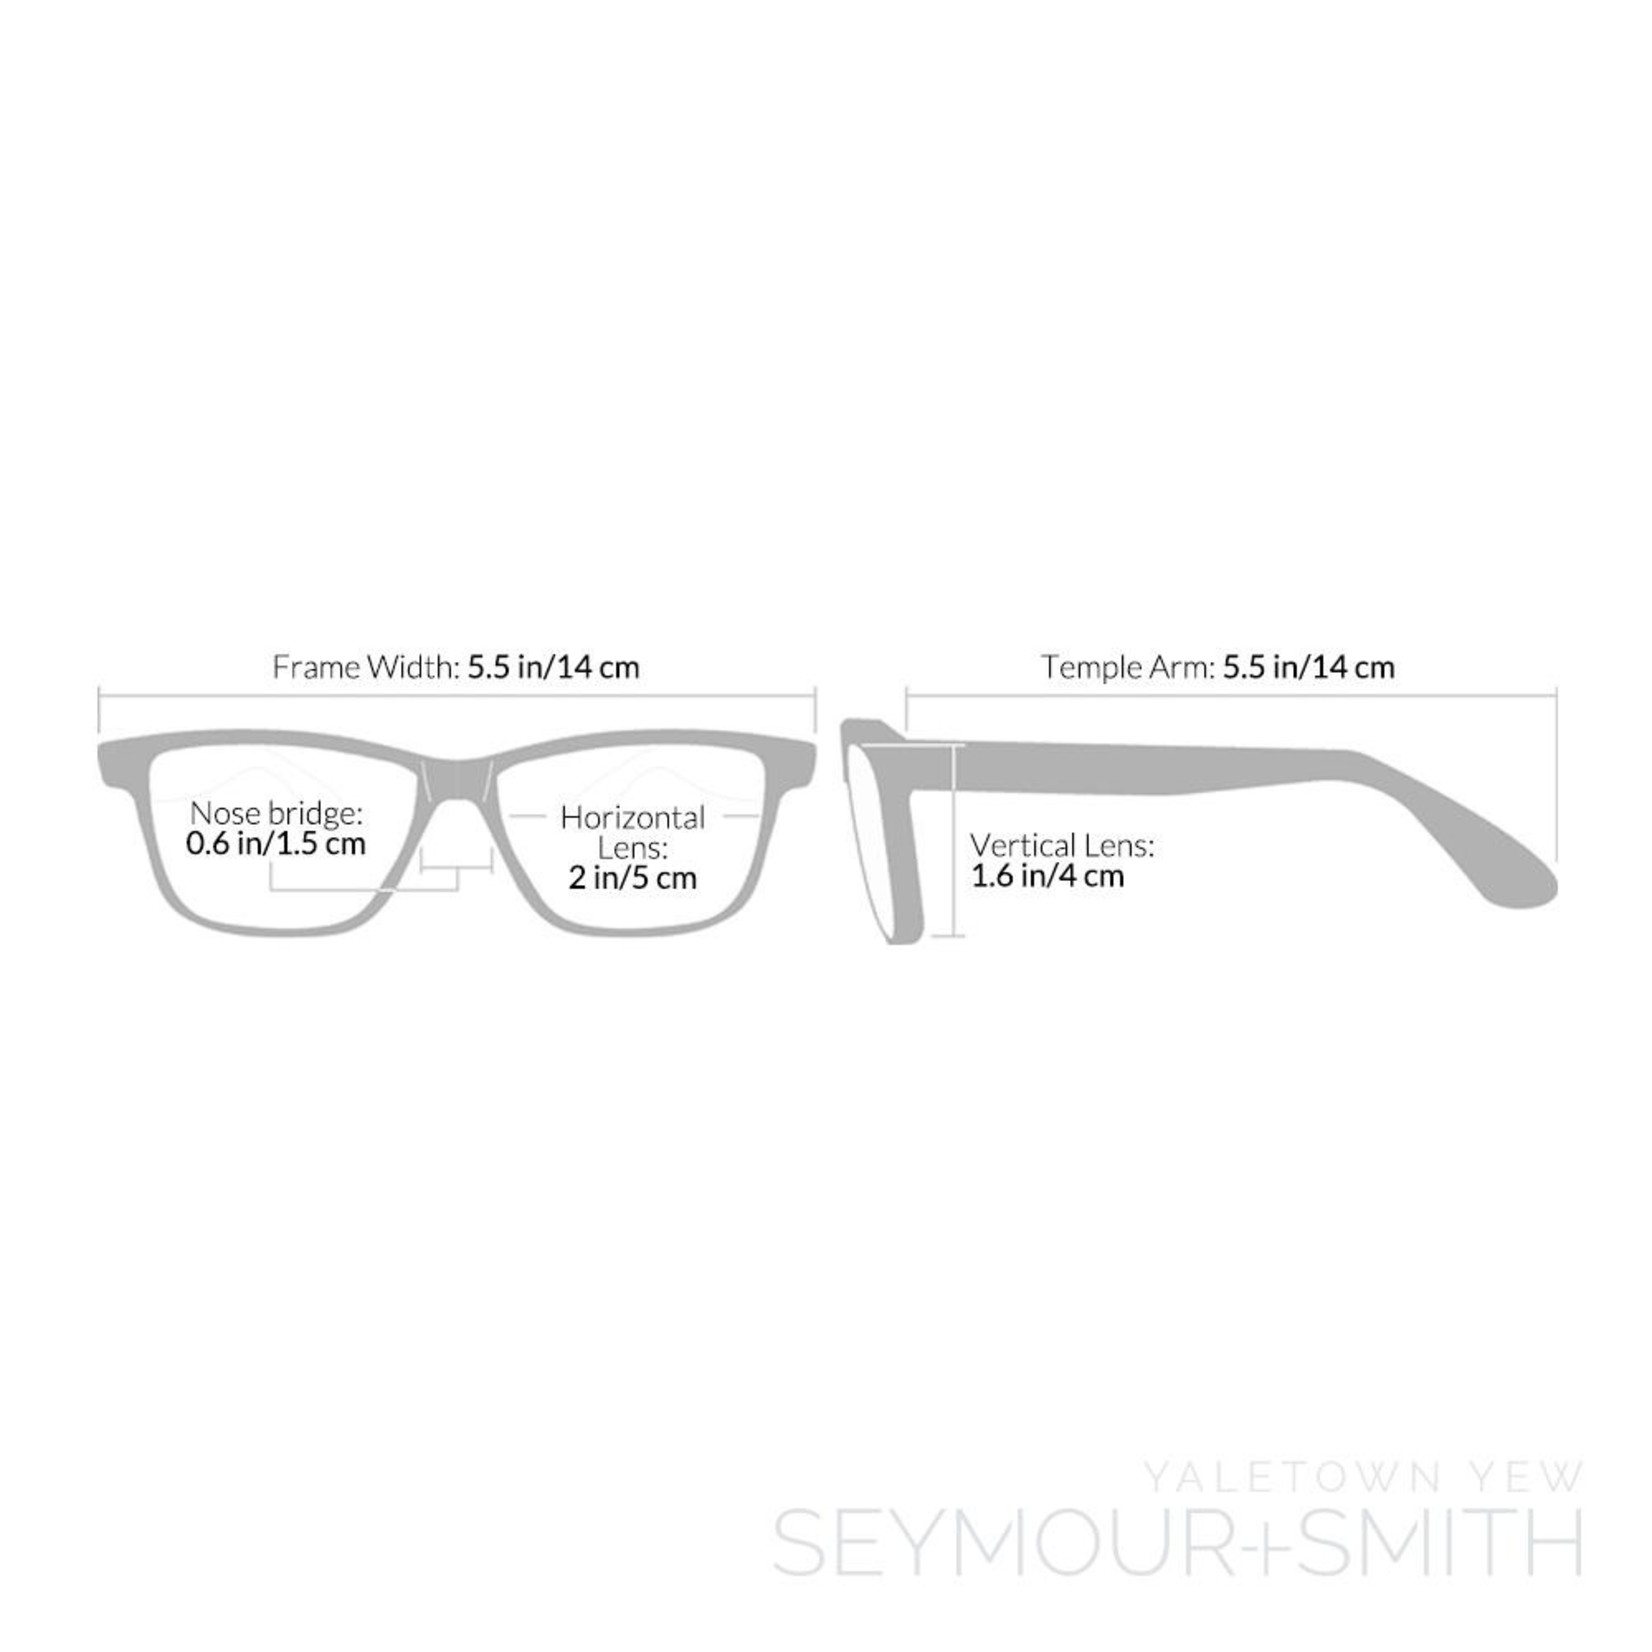 Seymour + Smith Yaletown Yew Reading Glasses